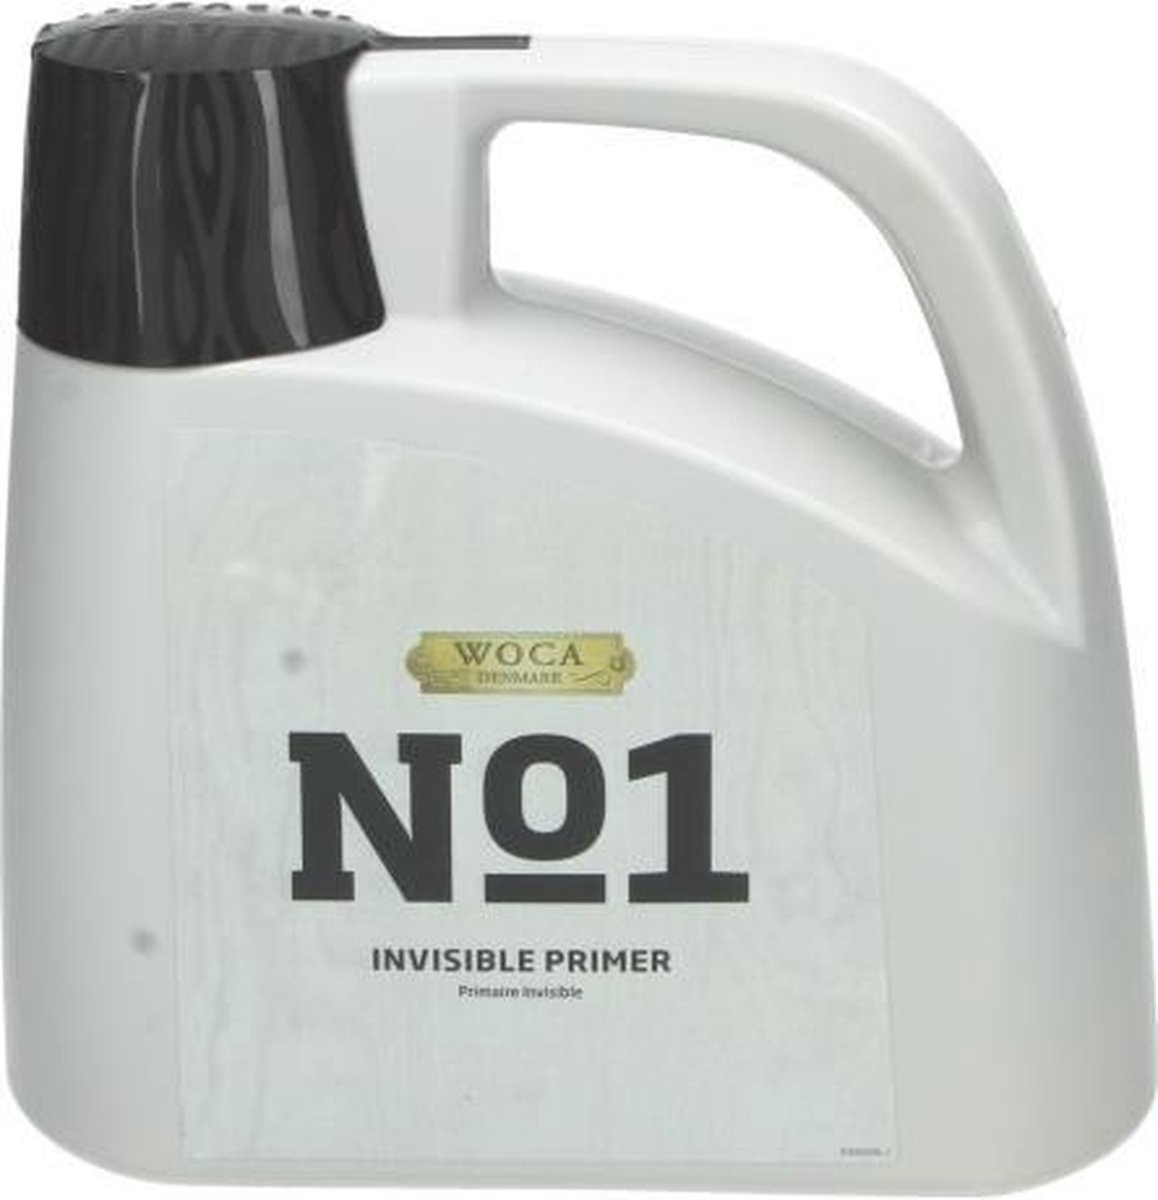 Woca No1 Invisible Primer - 2.5 liter - Woca